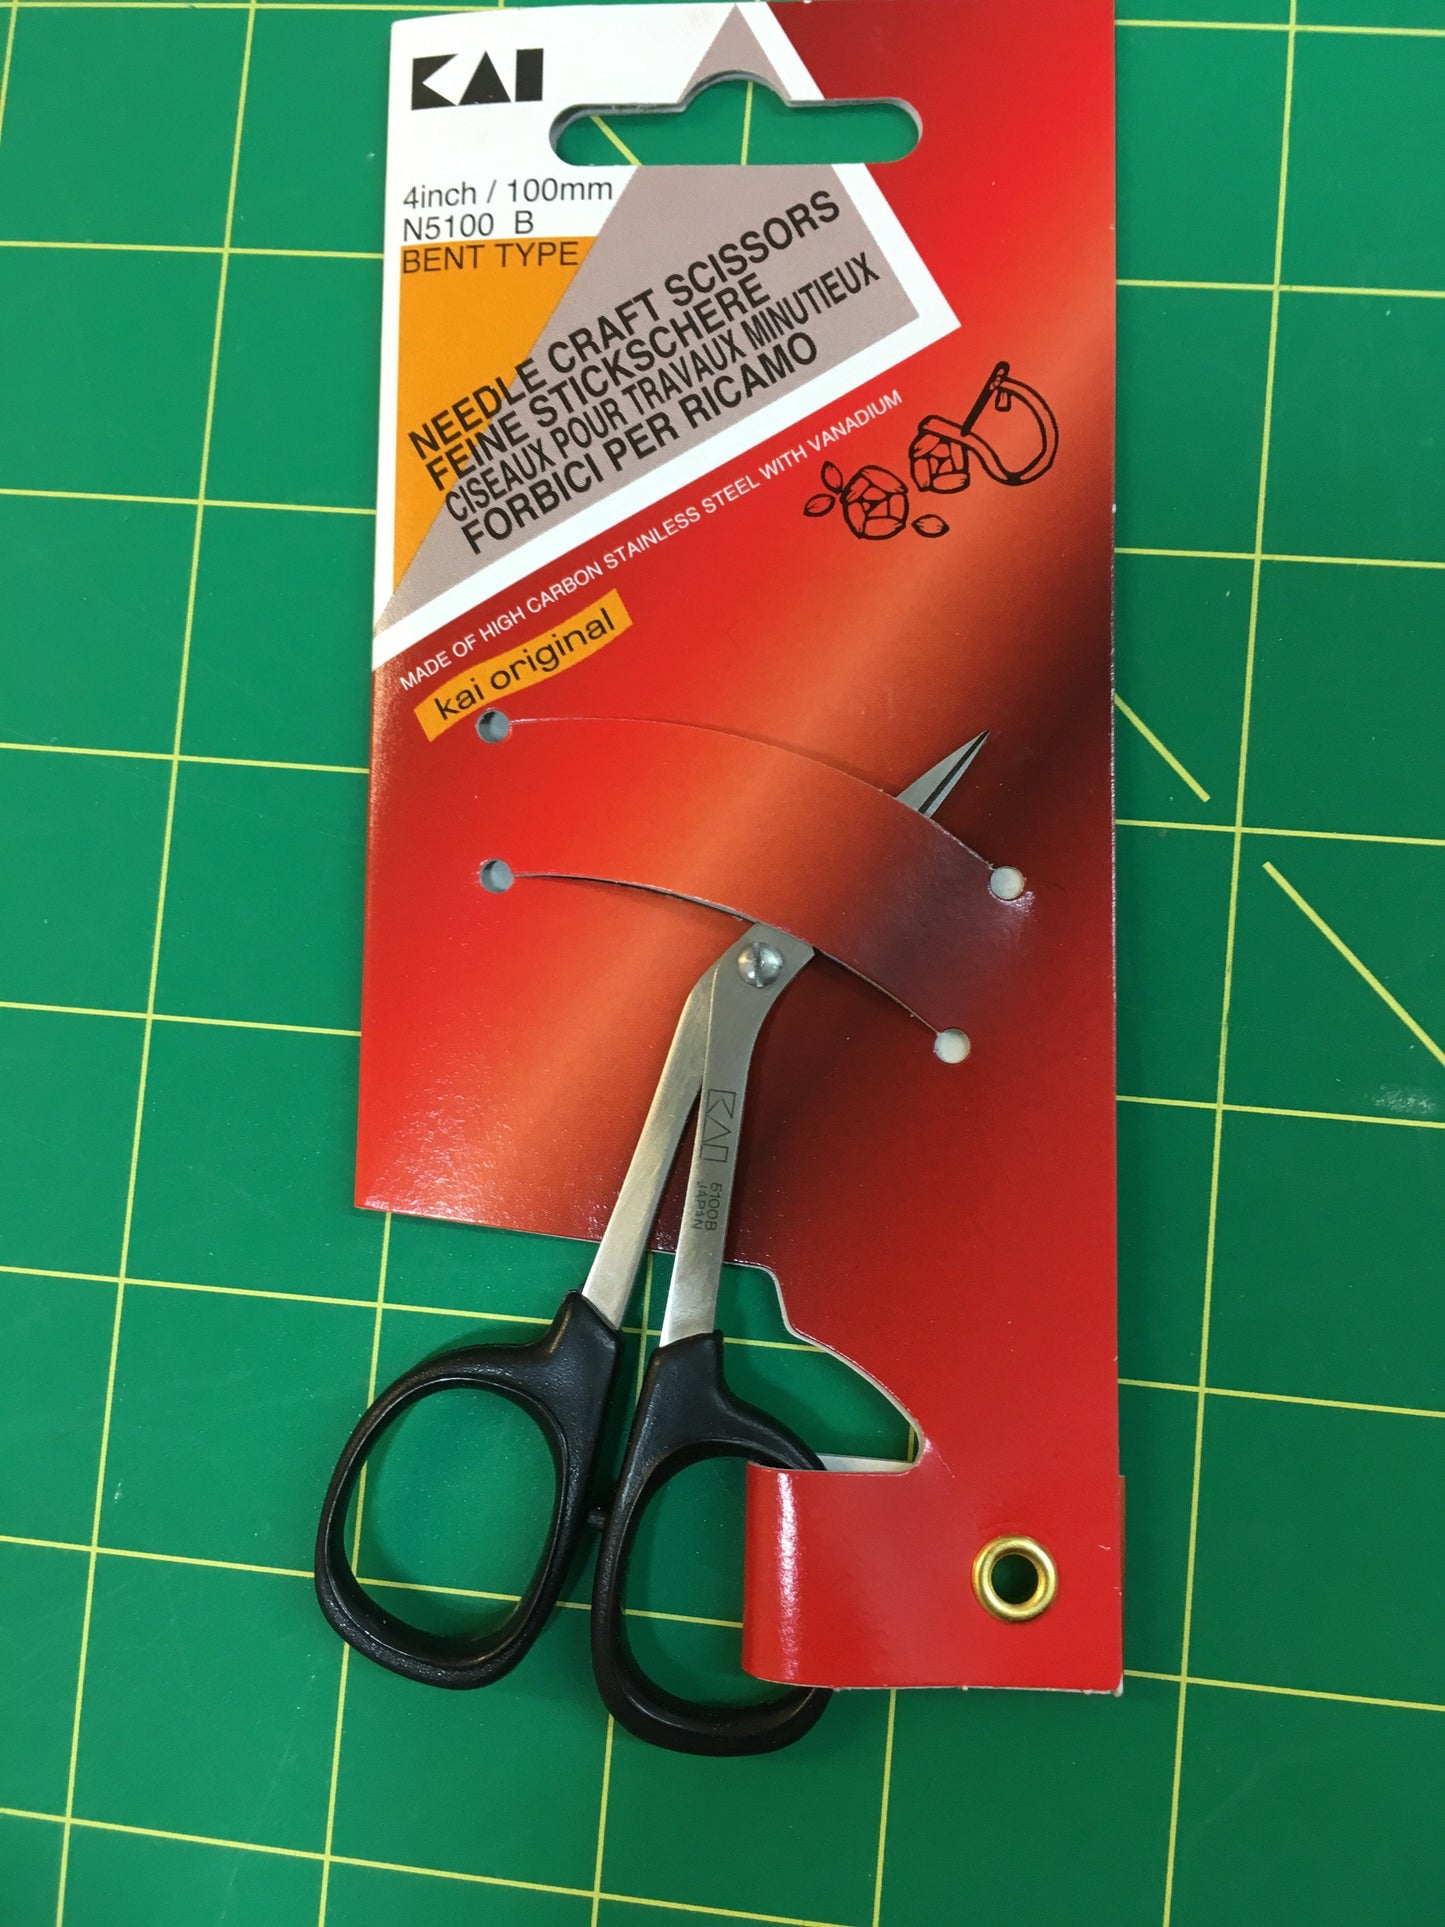 KAI N5100 Bent Needlecraft Scissors